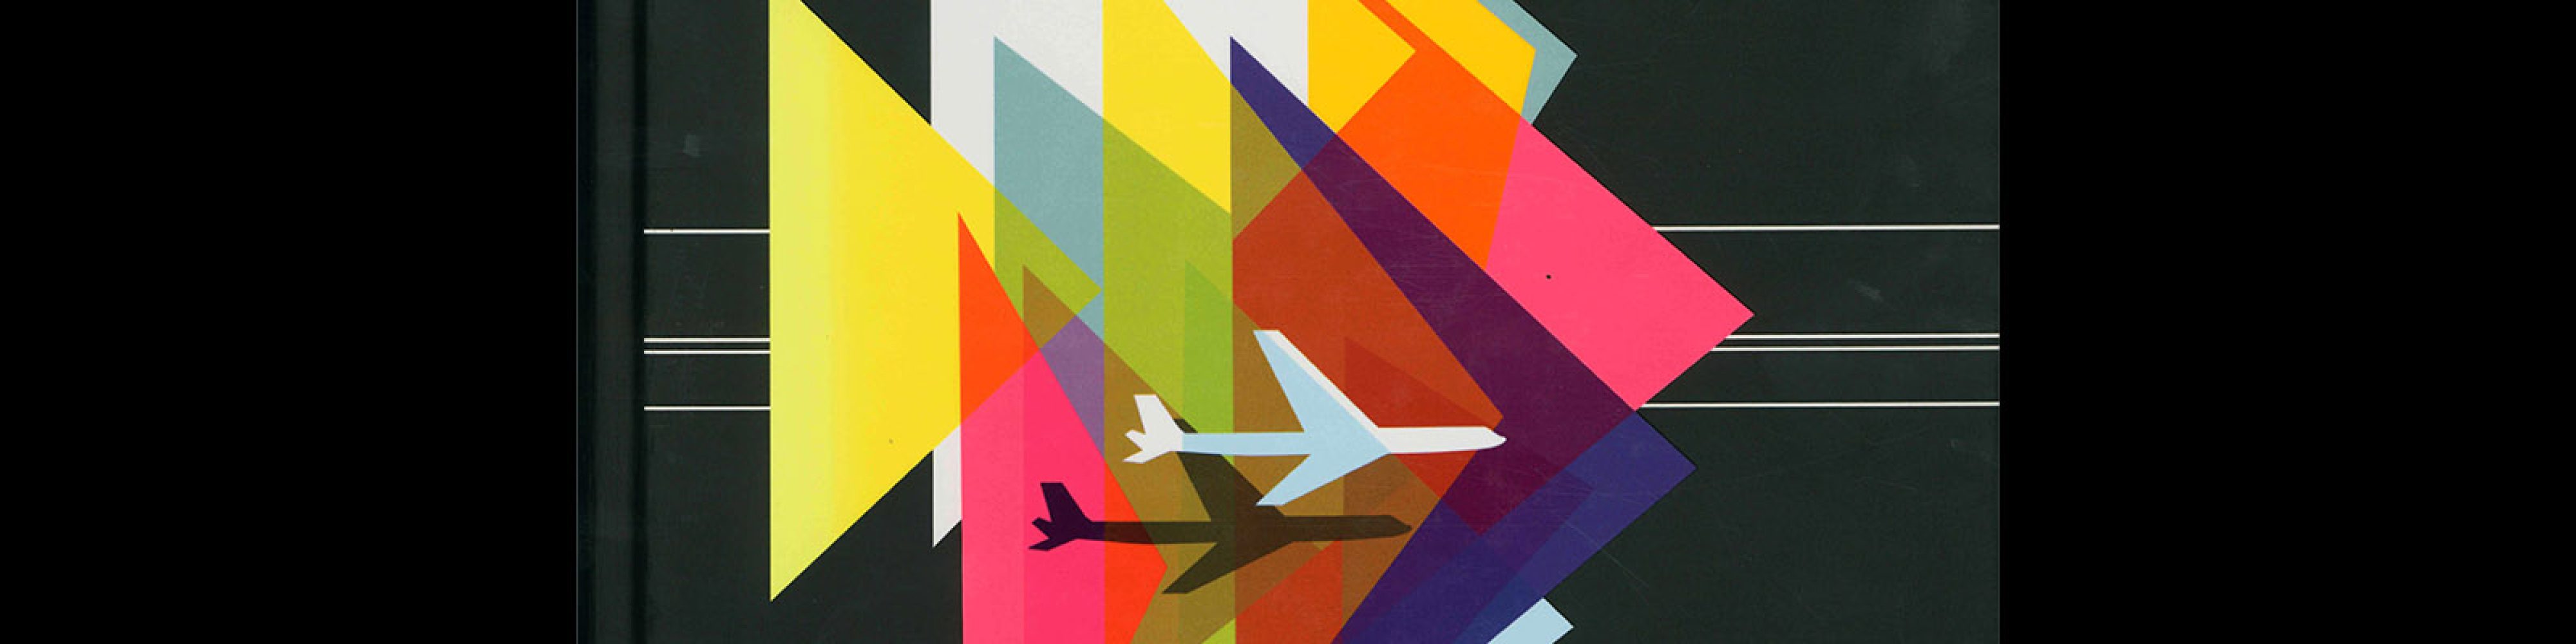 Airline Visual Identity 1945-1975, 2016